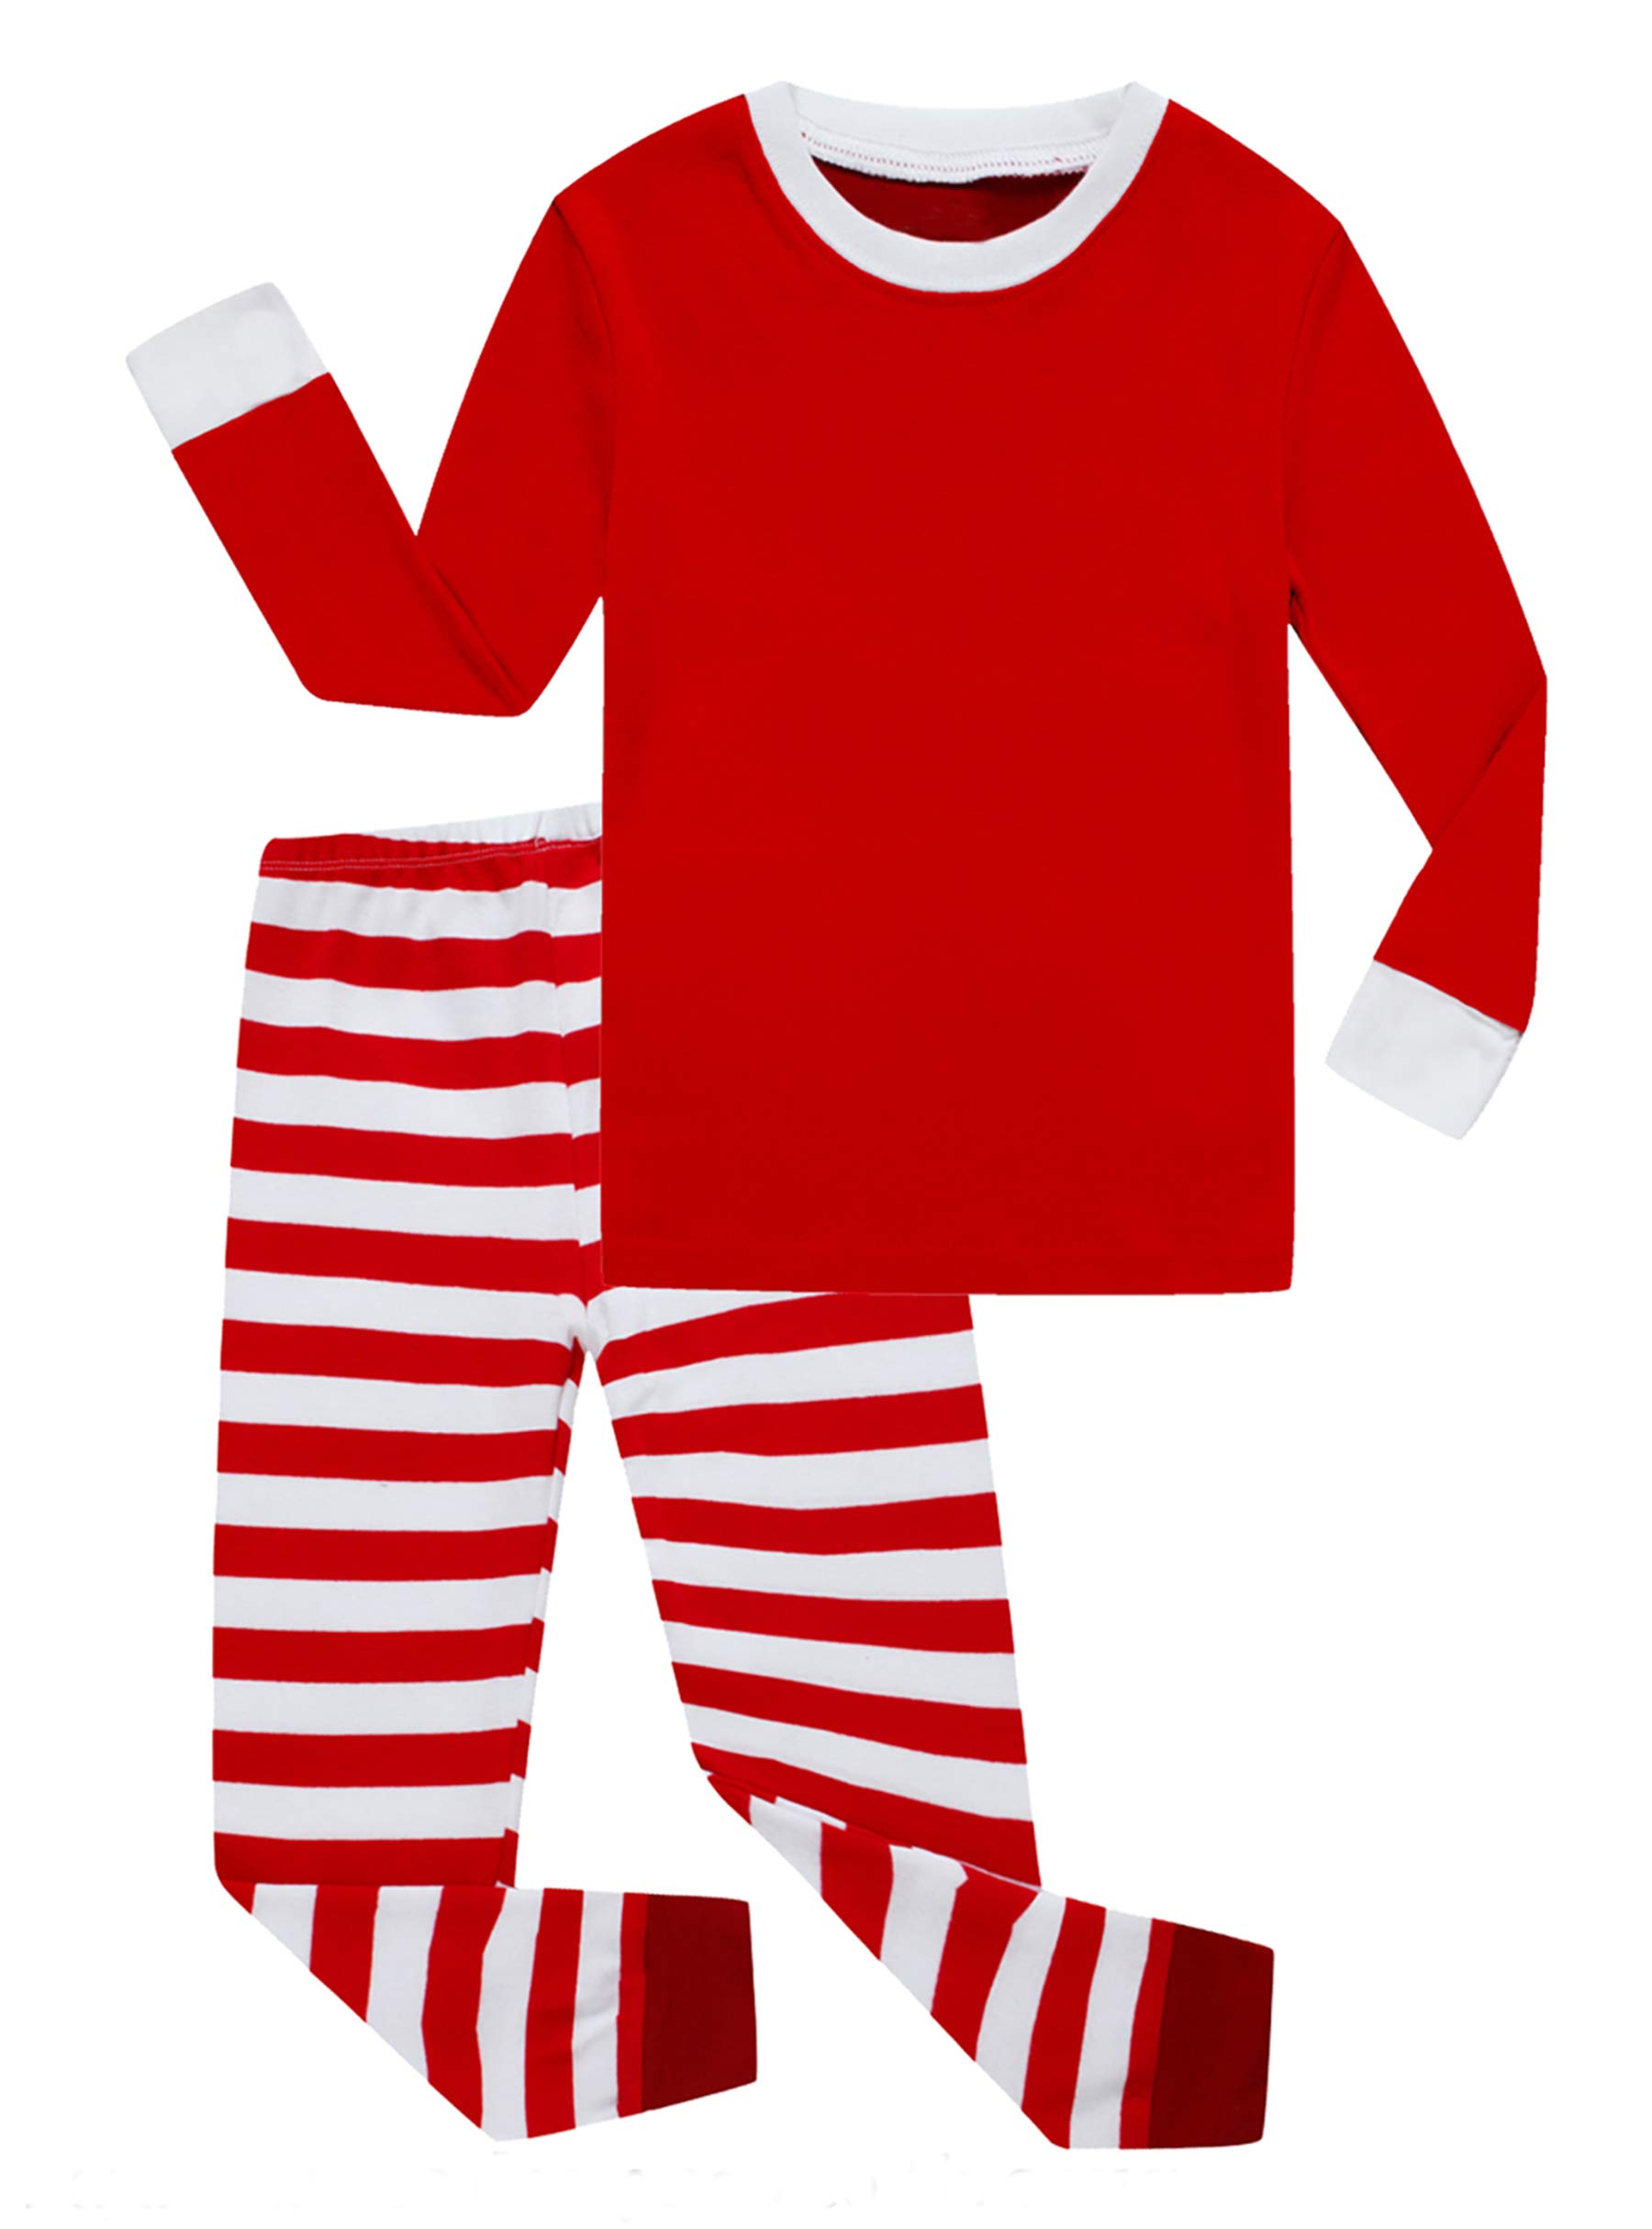 Family Feeling Little Girls Boys Matching Christmas Pajamas Sets 100 Cotton Sleepwears Toddler Kids Pjs Size 18-24 Months Stripe